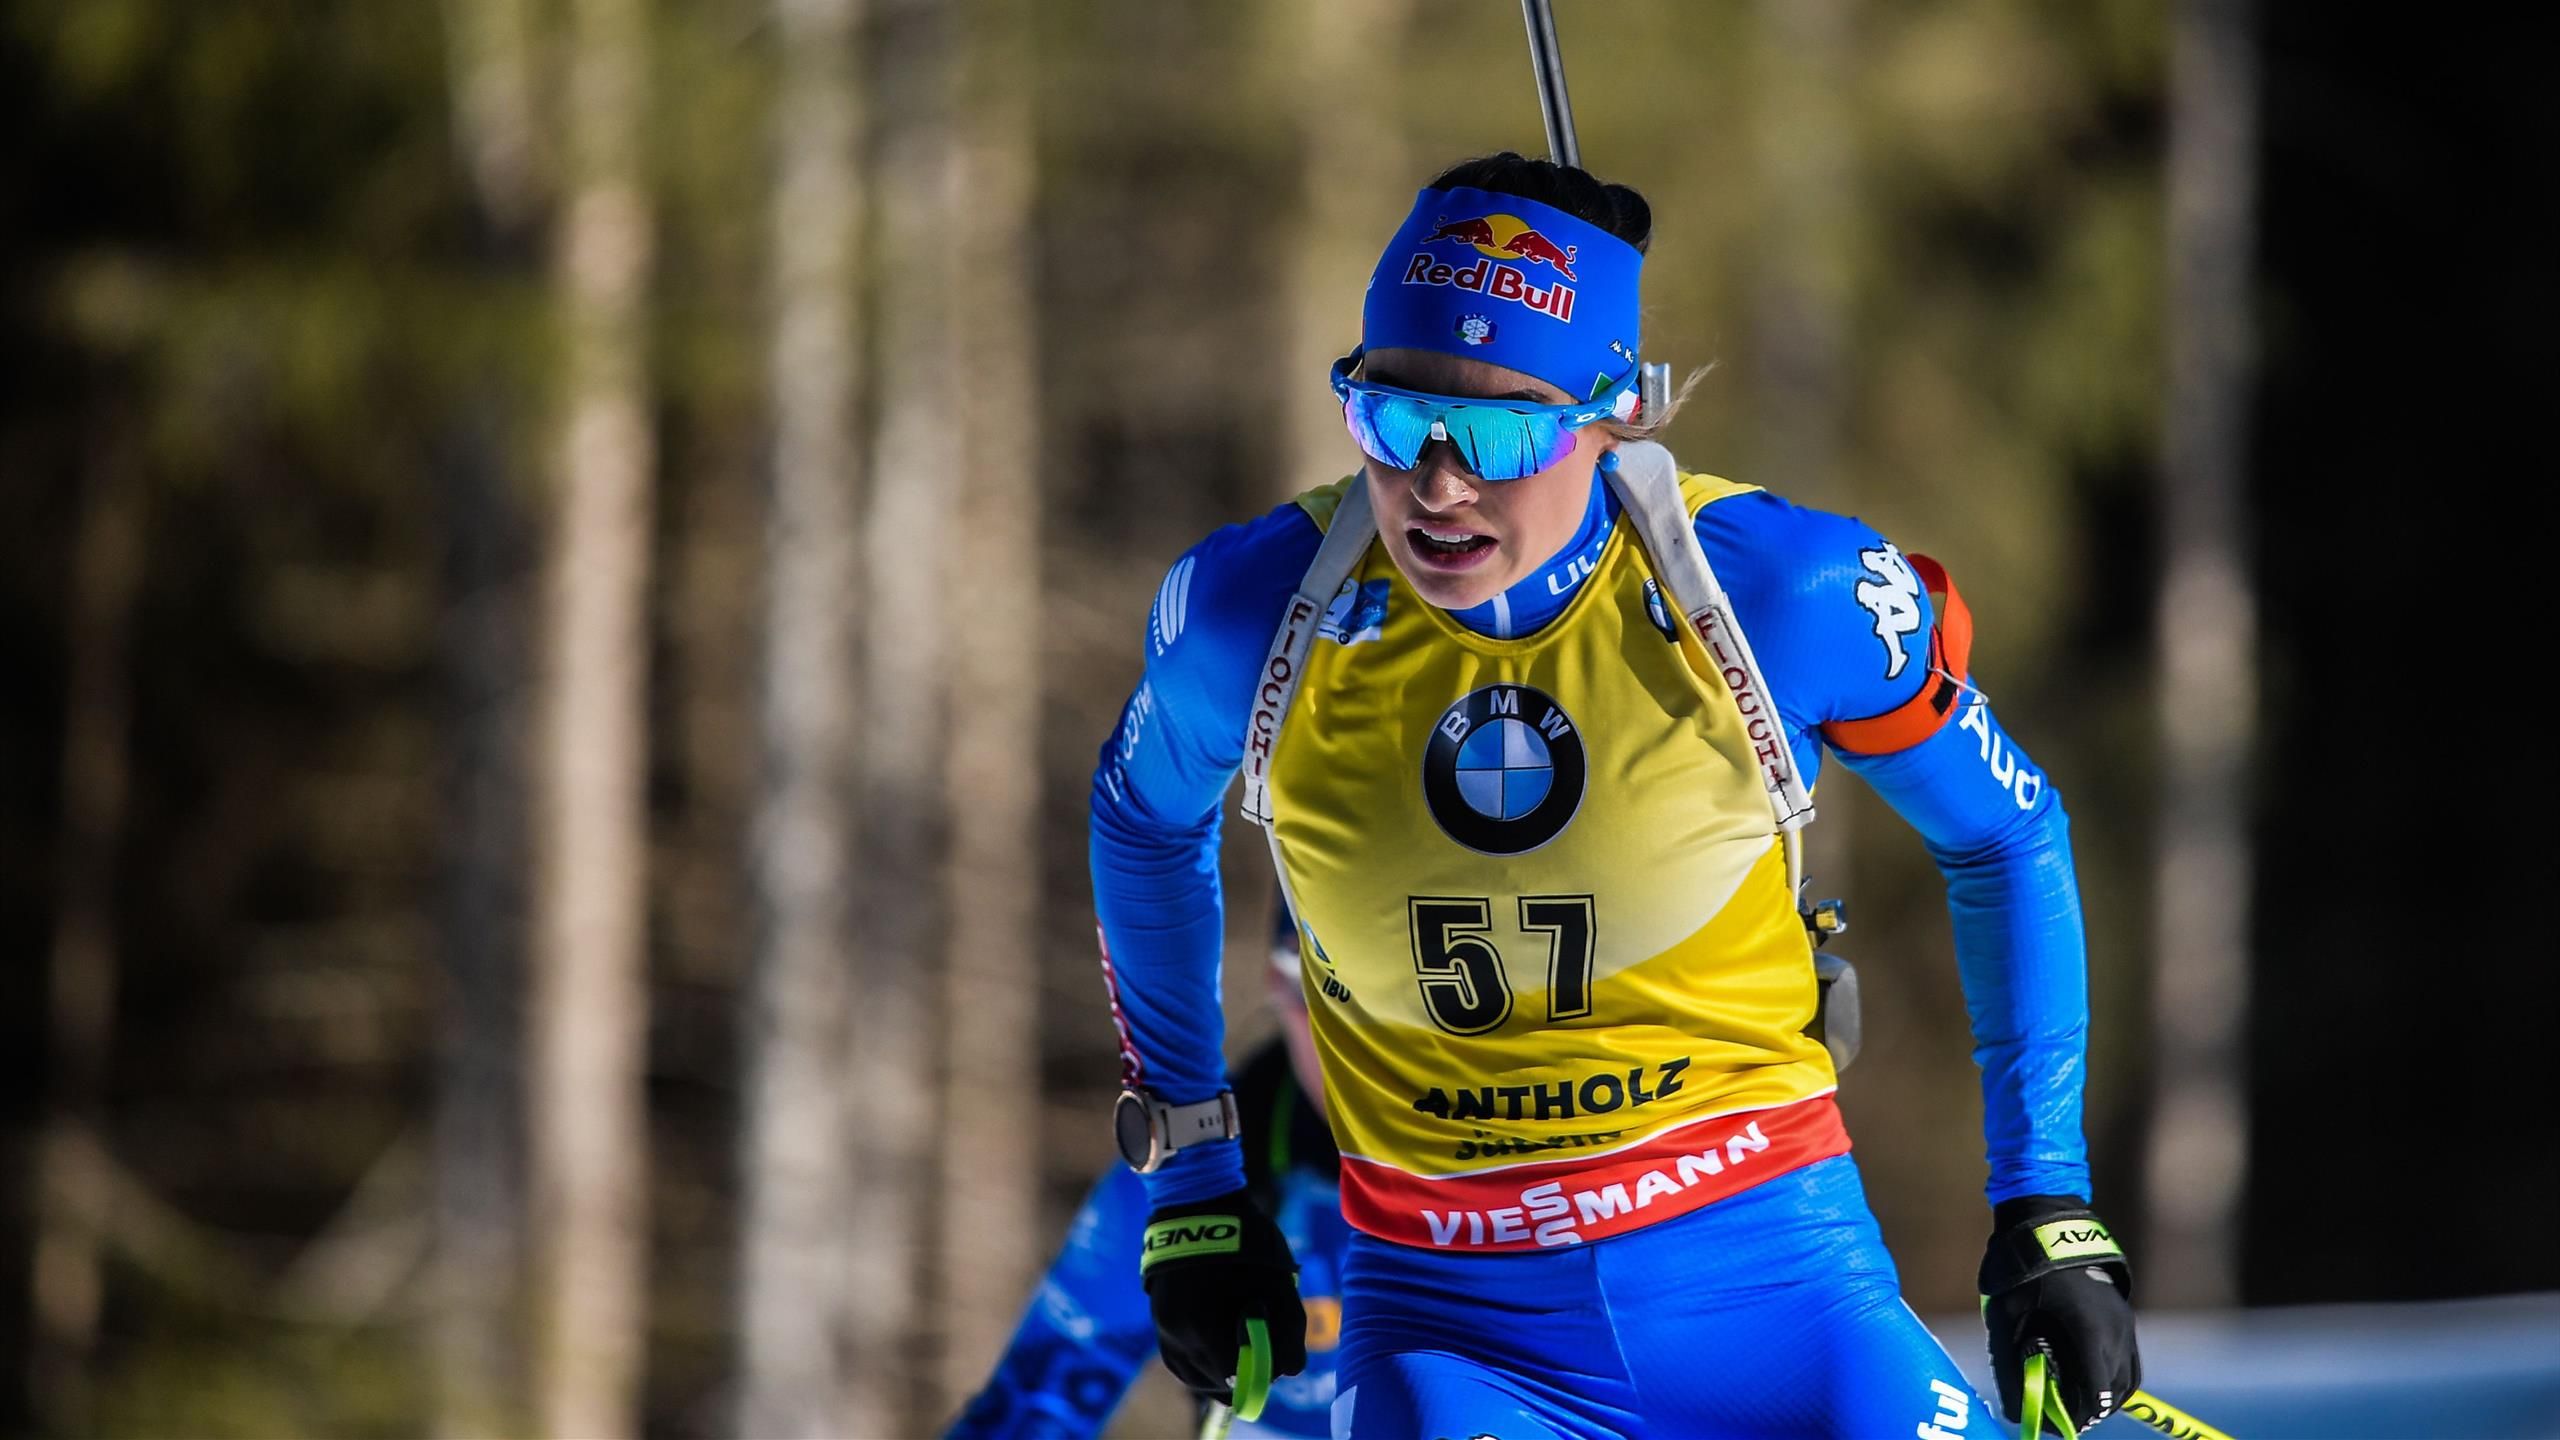 Winter sports news - Home Biathlon World Championship gold for Dorothea Wierer